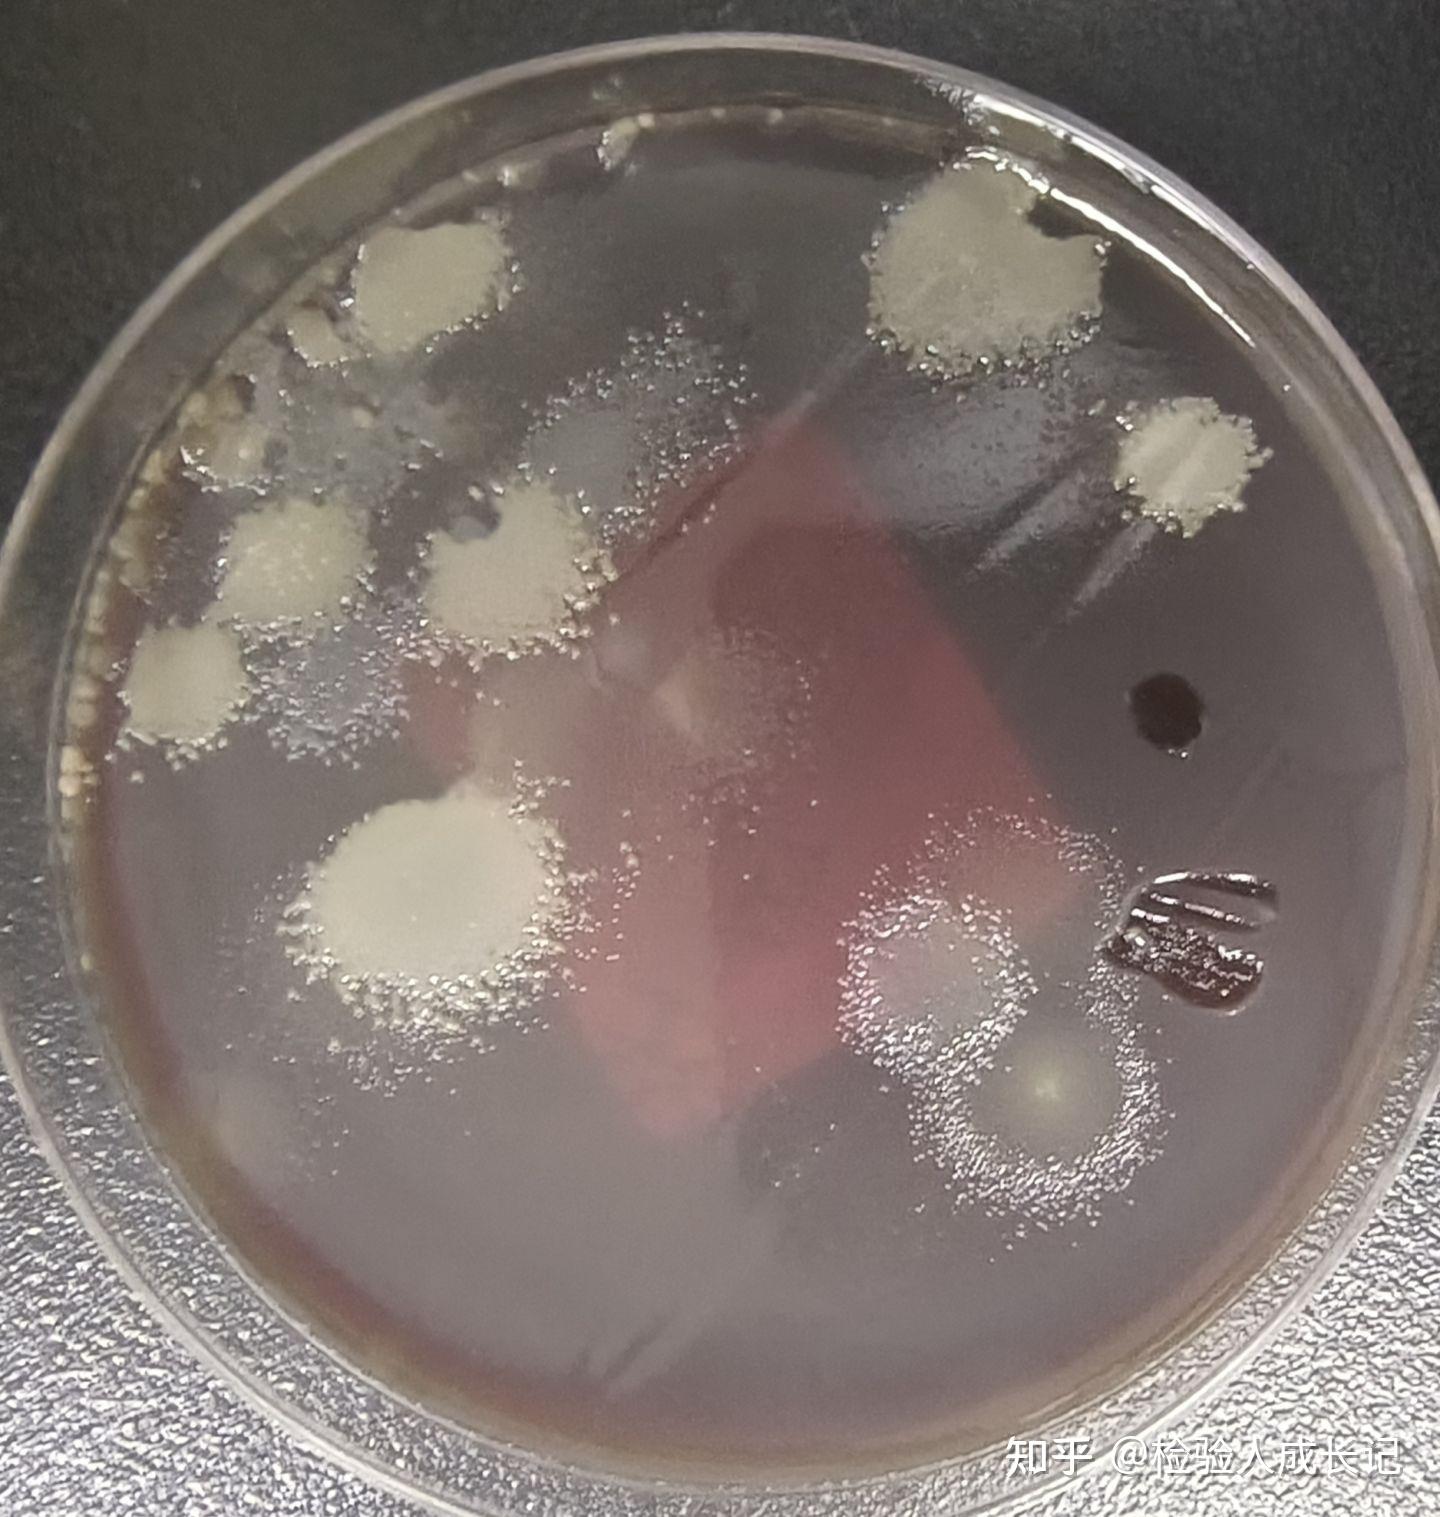 高中生物 探究酵母菌细胞呼吸的方式_哔哩哔哩 (゜-゜)つロ 干杯~-bilibili